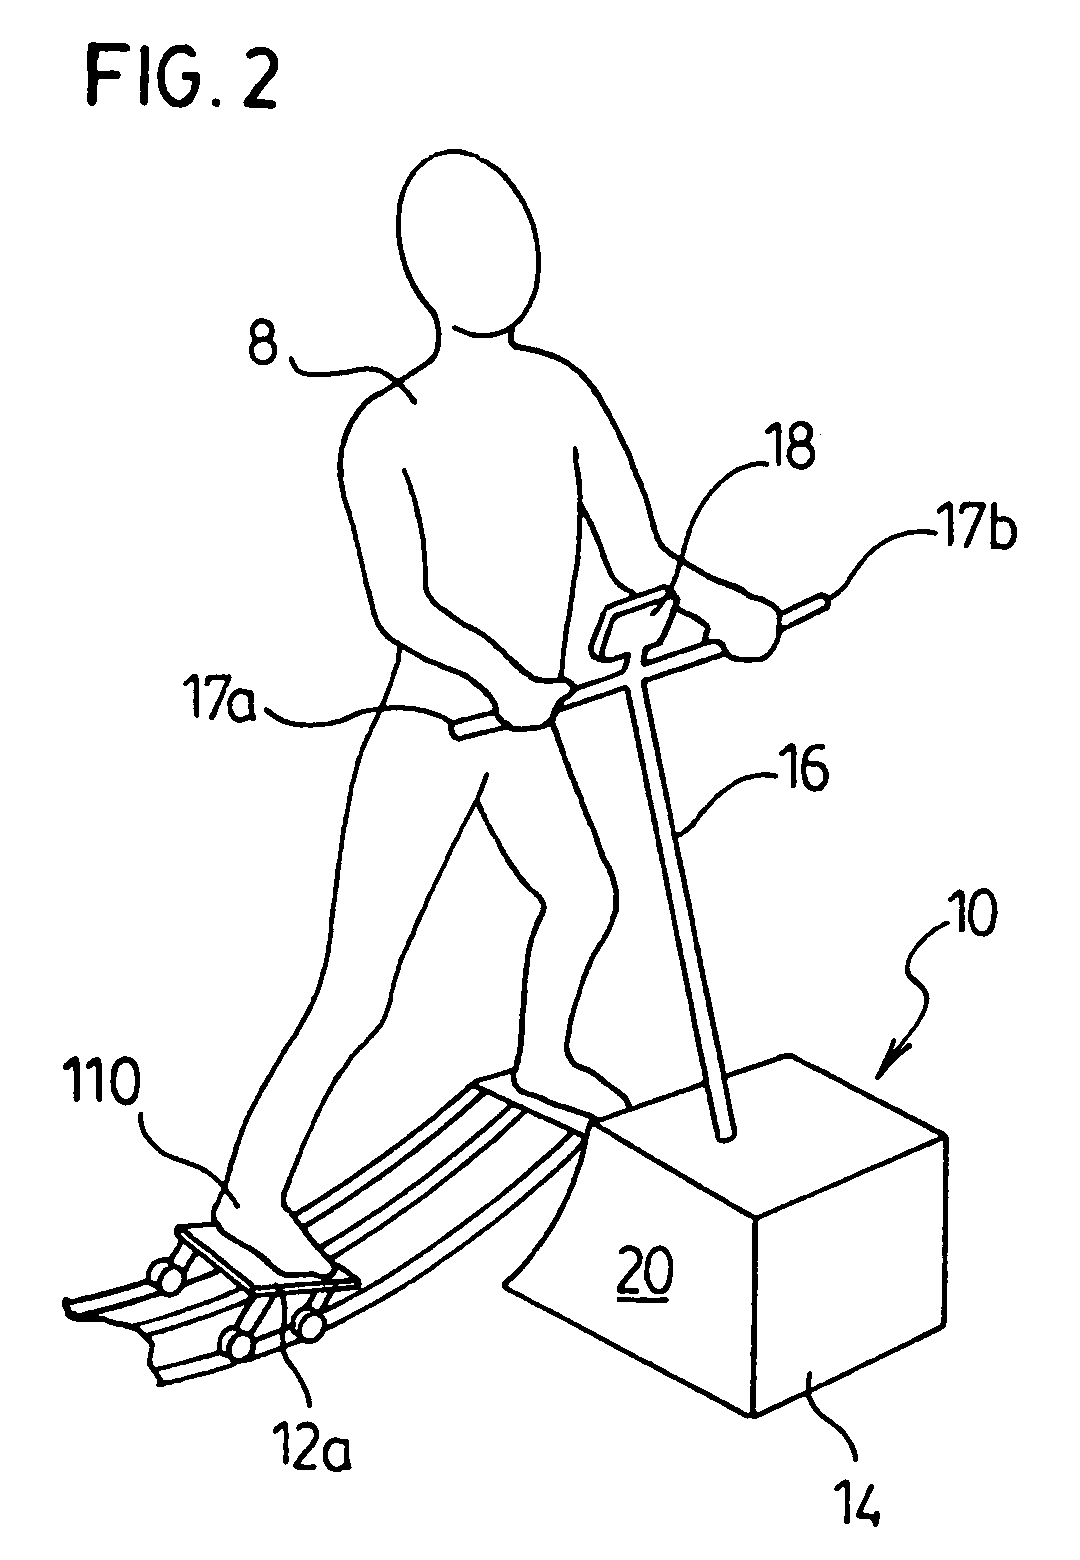 Exercise apparatus for simulating skating movement